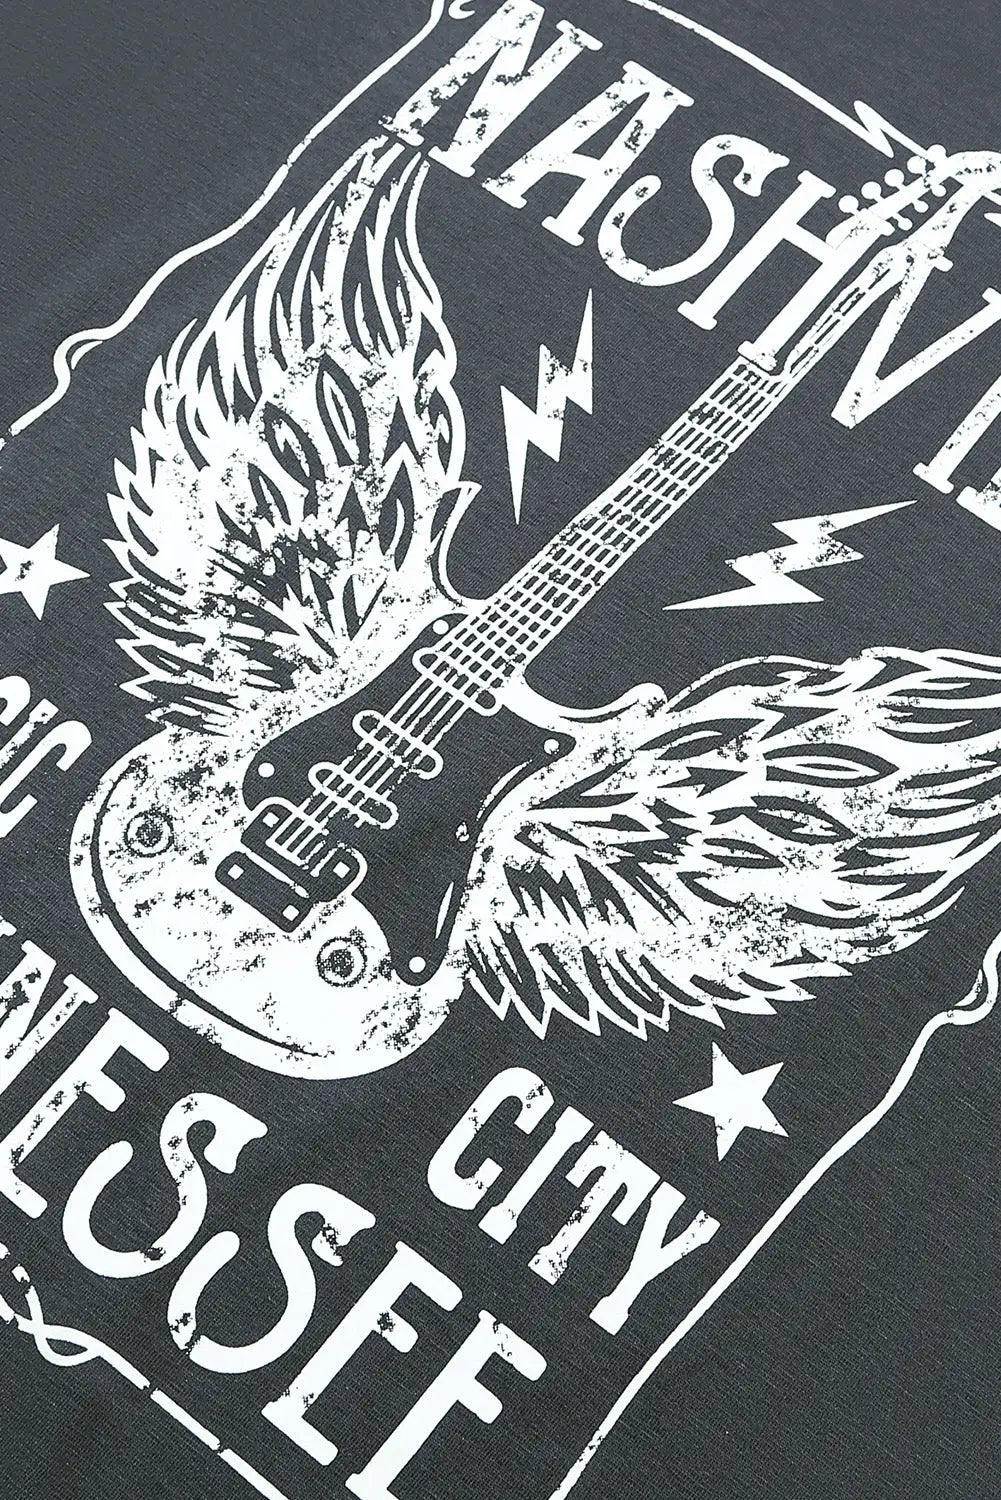 Gray guitar slogan letter graphic print oversized t shirt - t-shirts